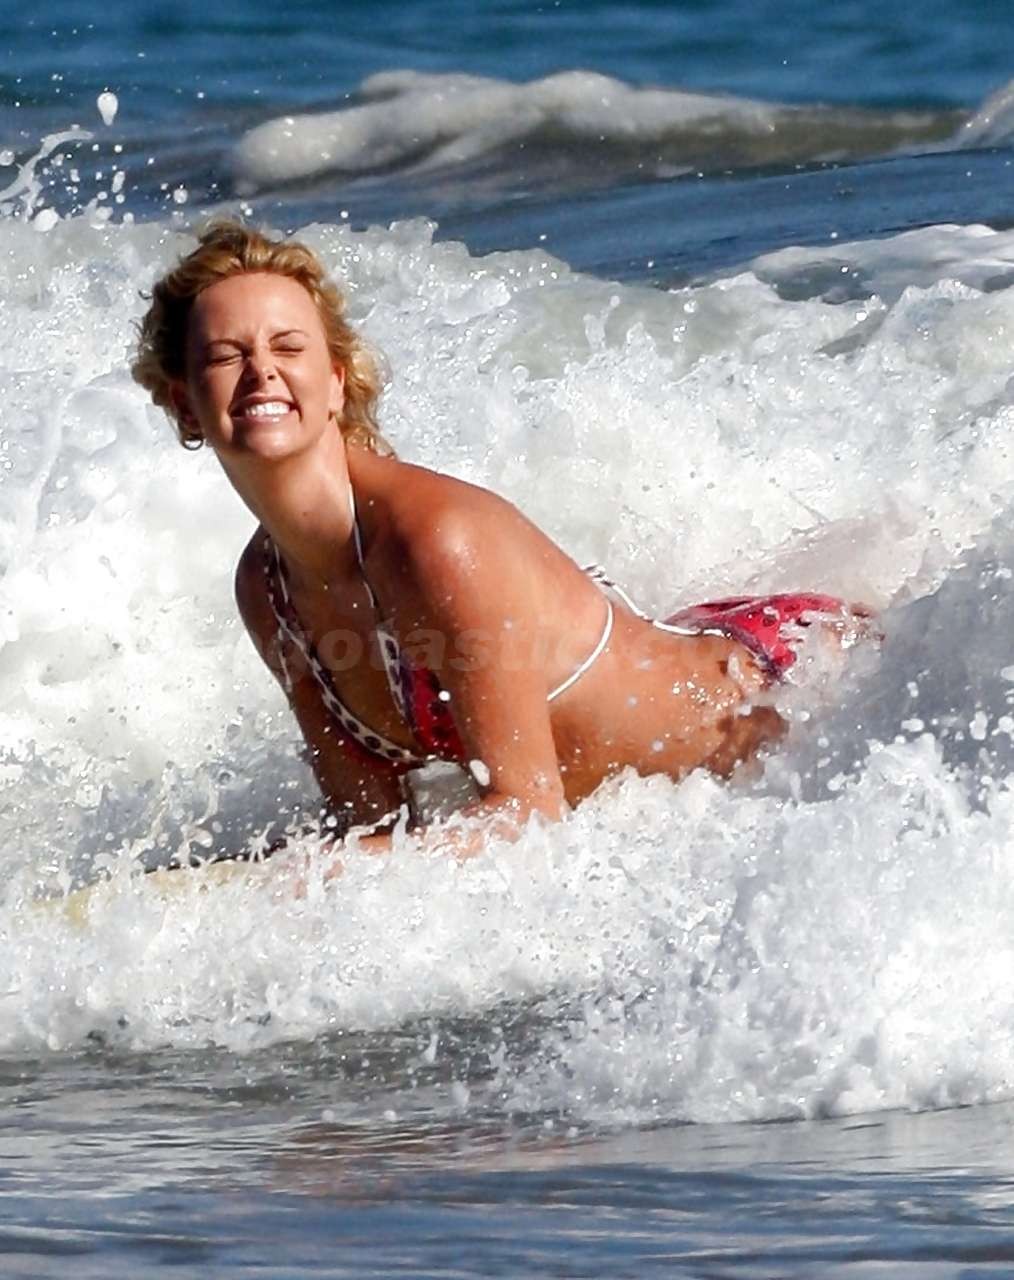 Charlize Theron enjoy playing in bikini on beach paparazzi pictures #75297161